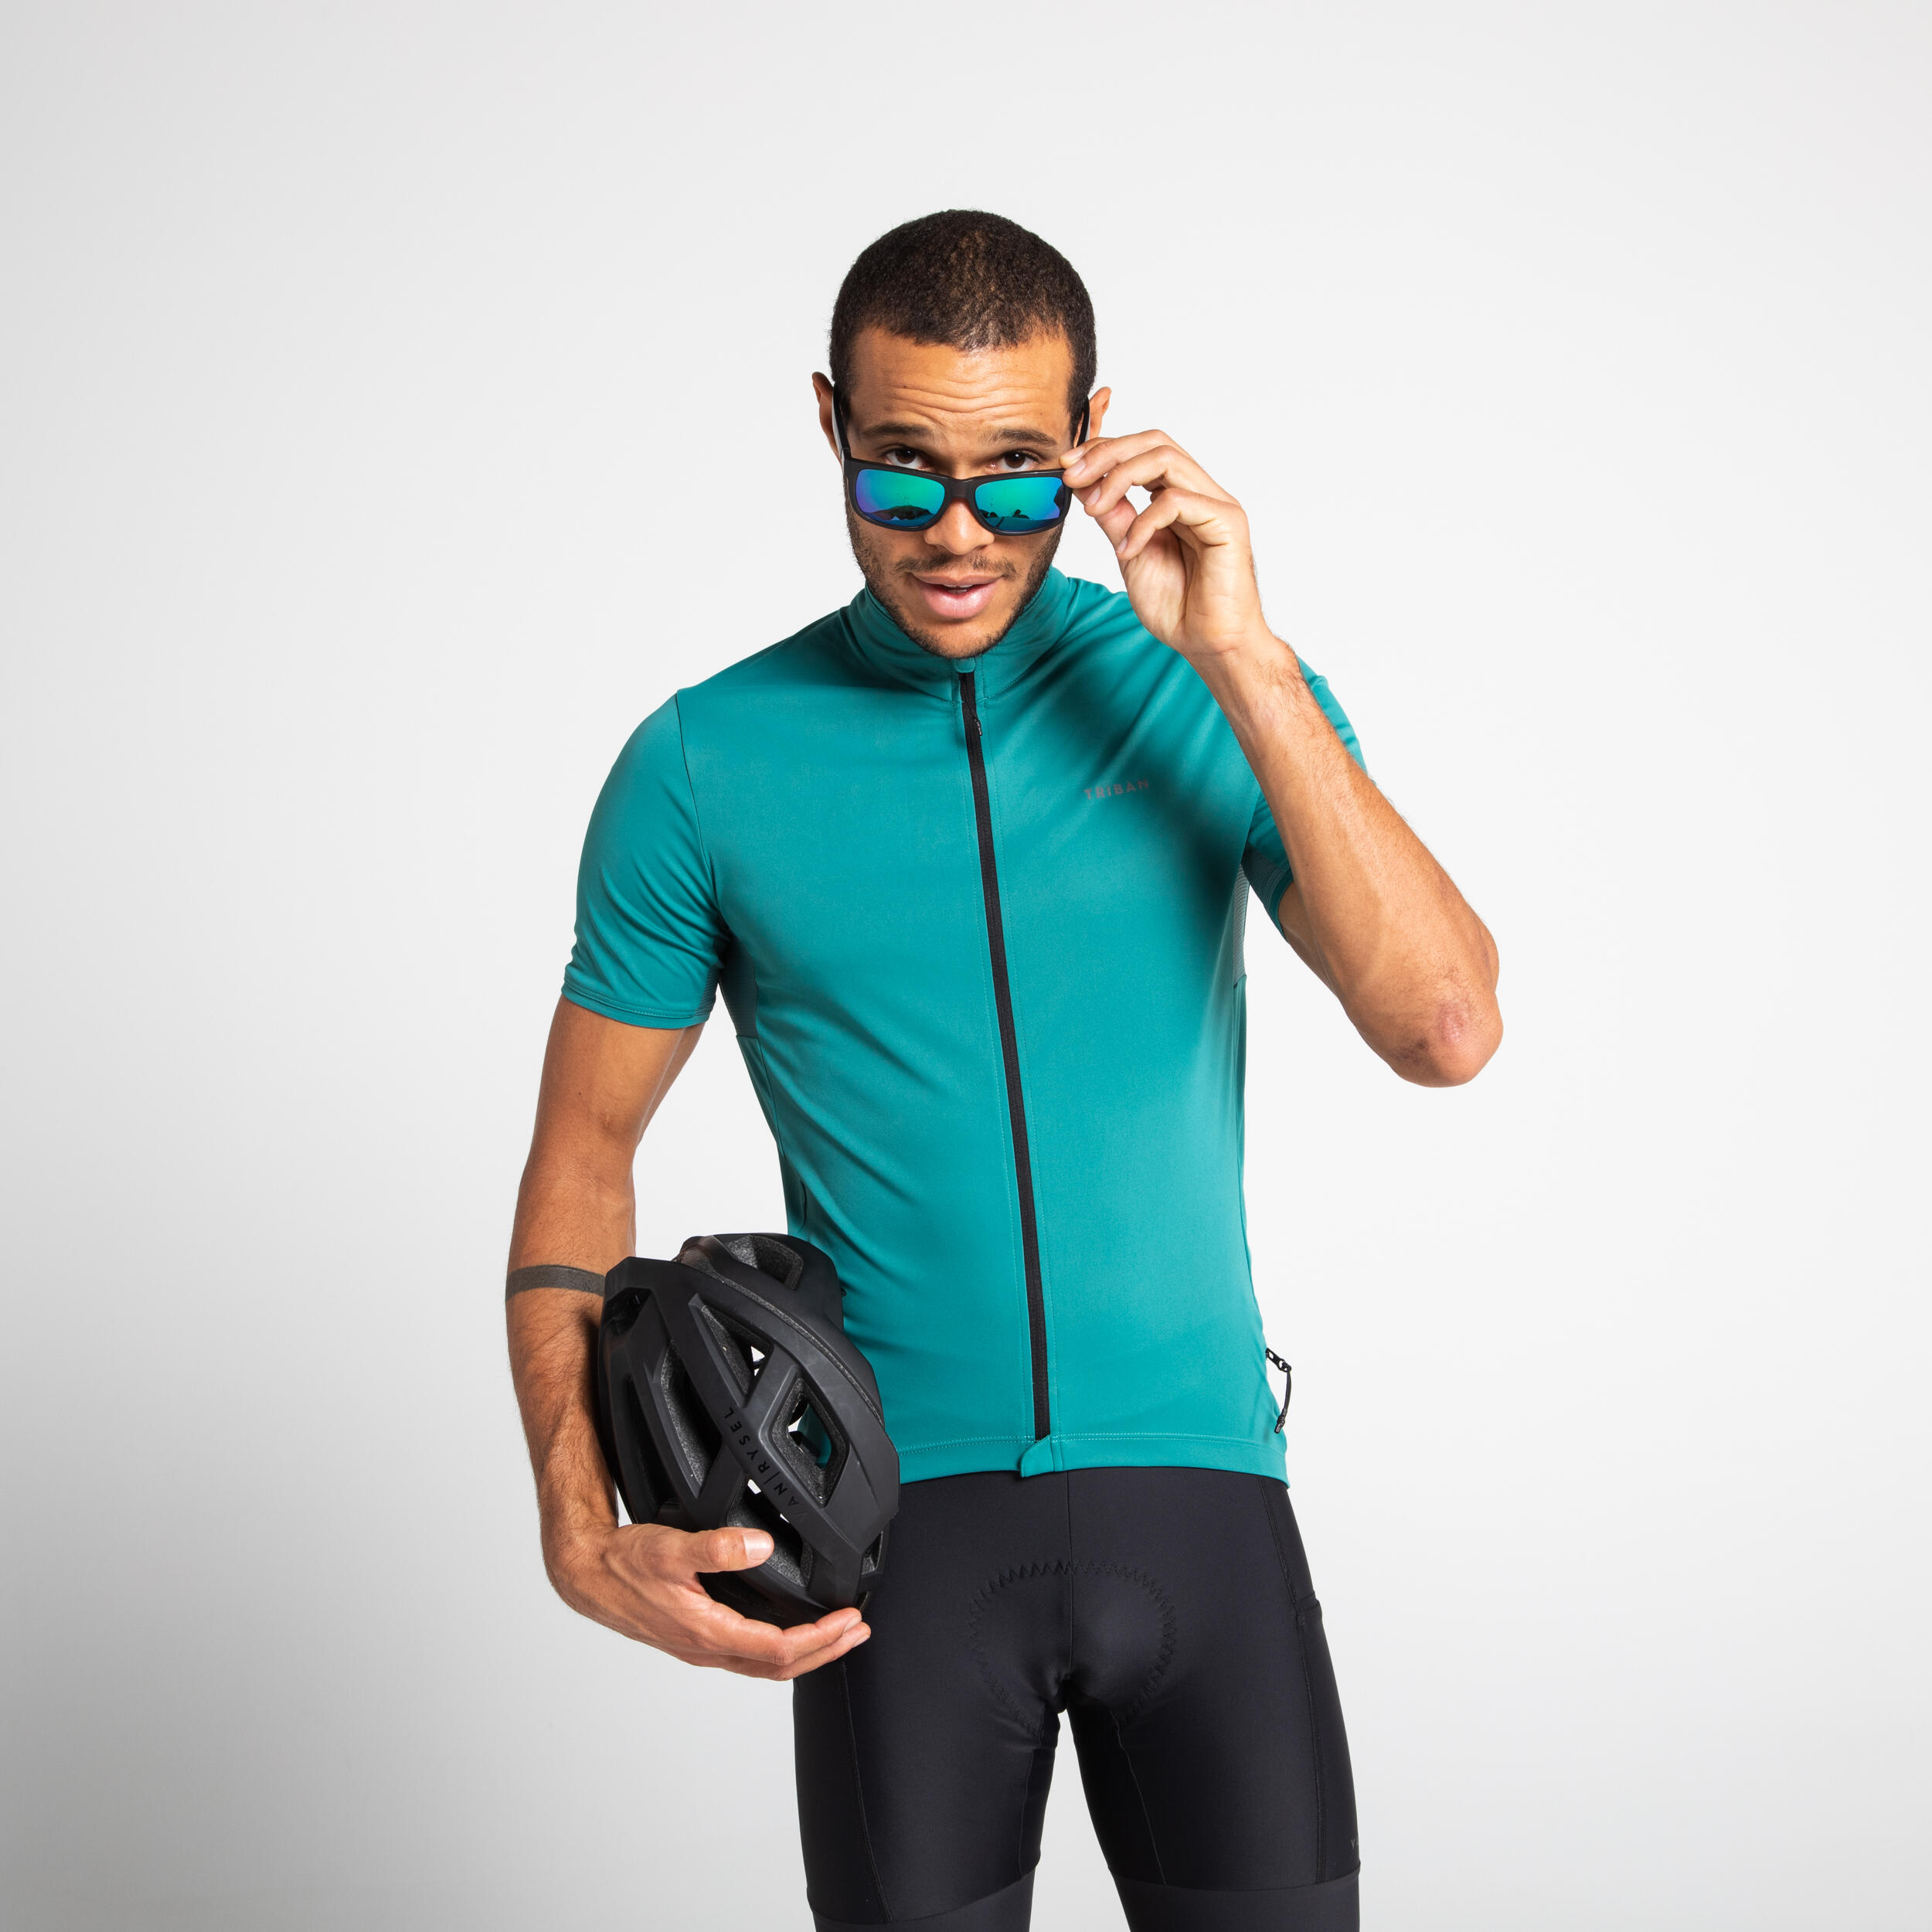 Men's Short-Sleeved Road Cycling Summer Jersey RC500 - Emerald Green 2/15